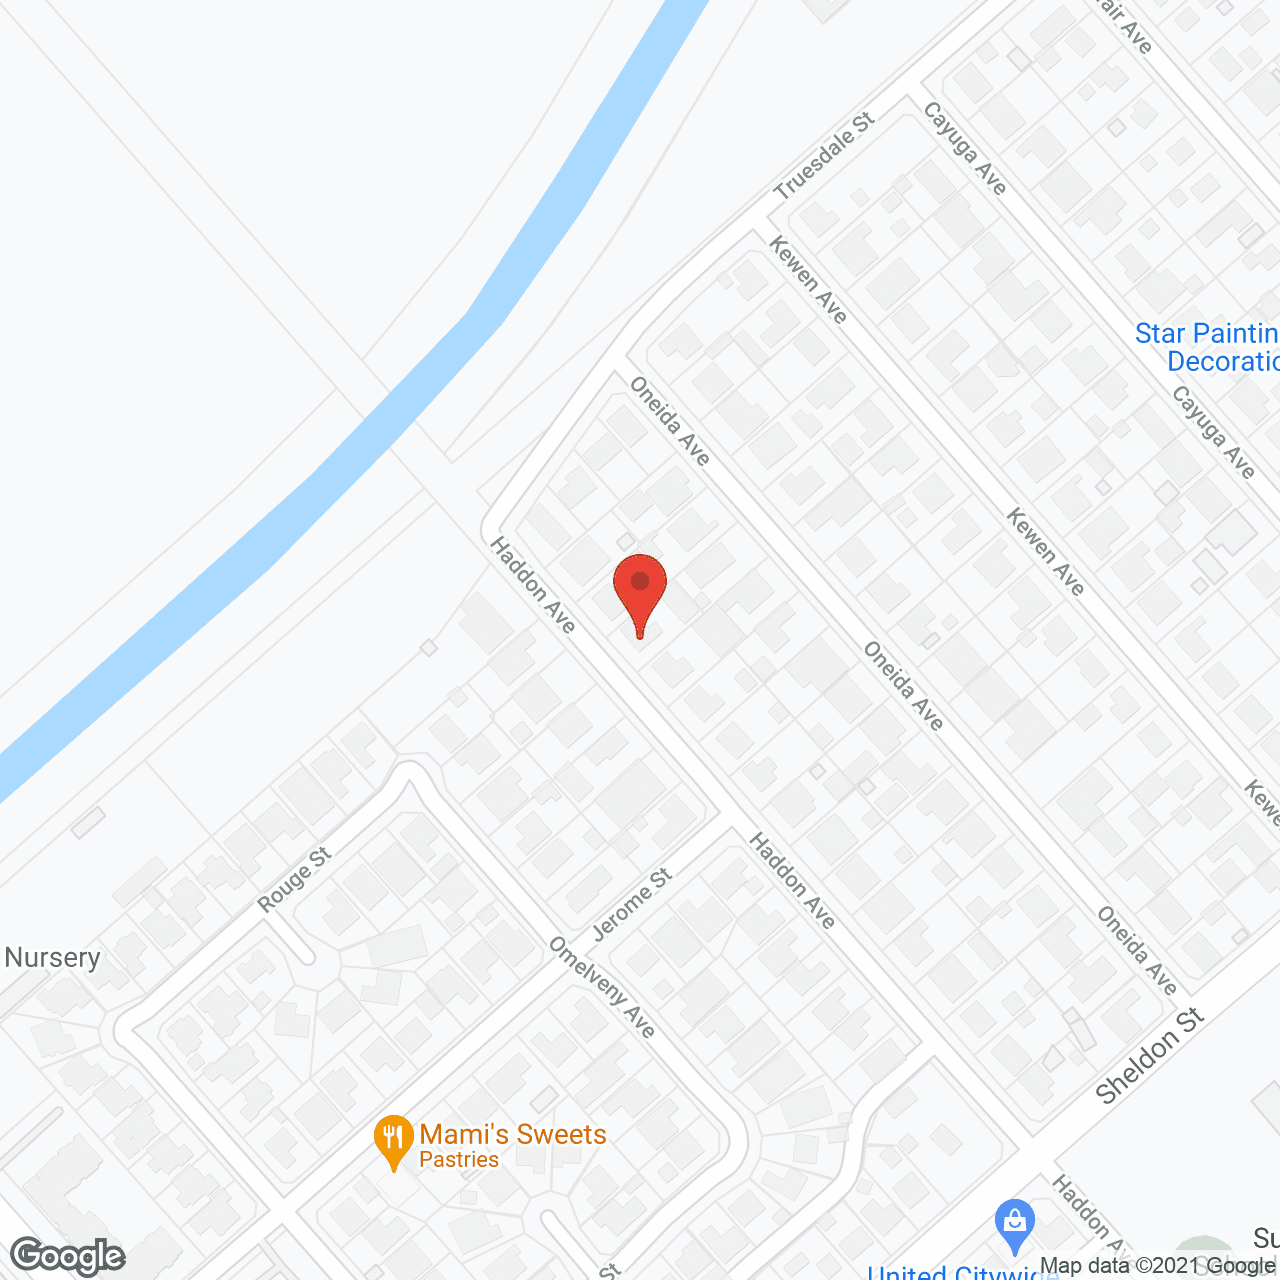 Sunnyside Residential Assisted Living in google map